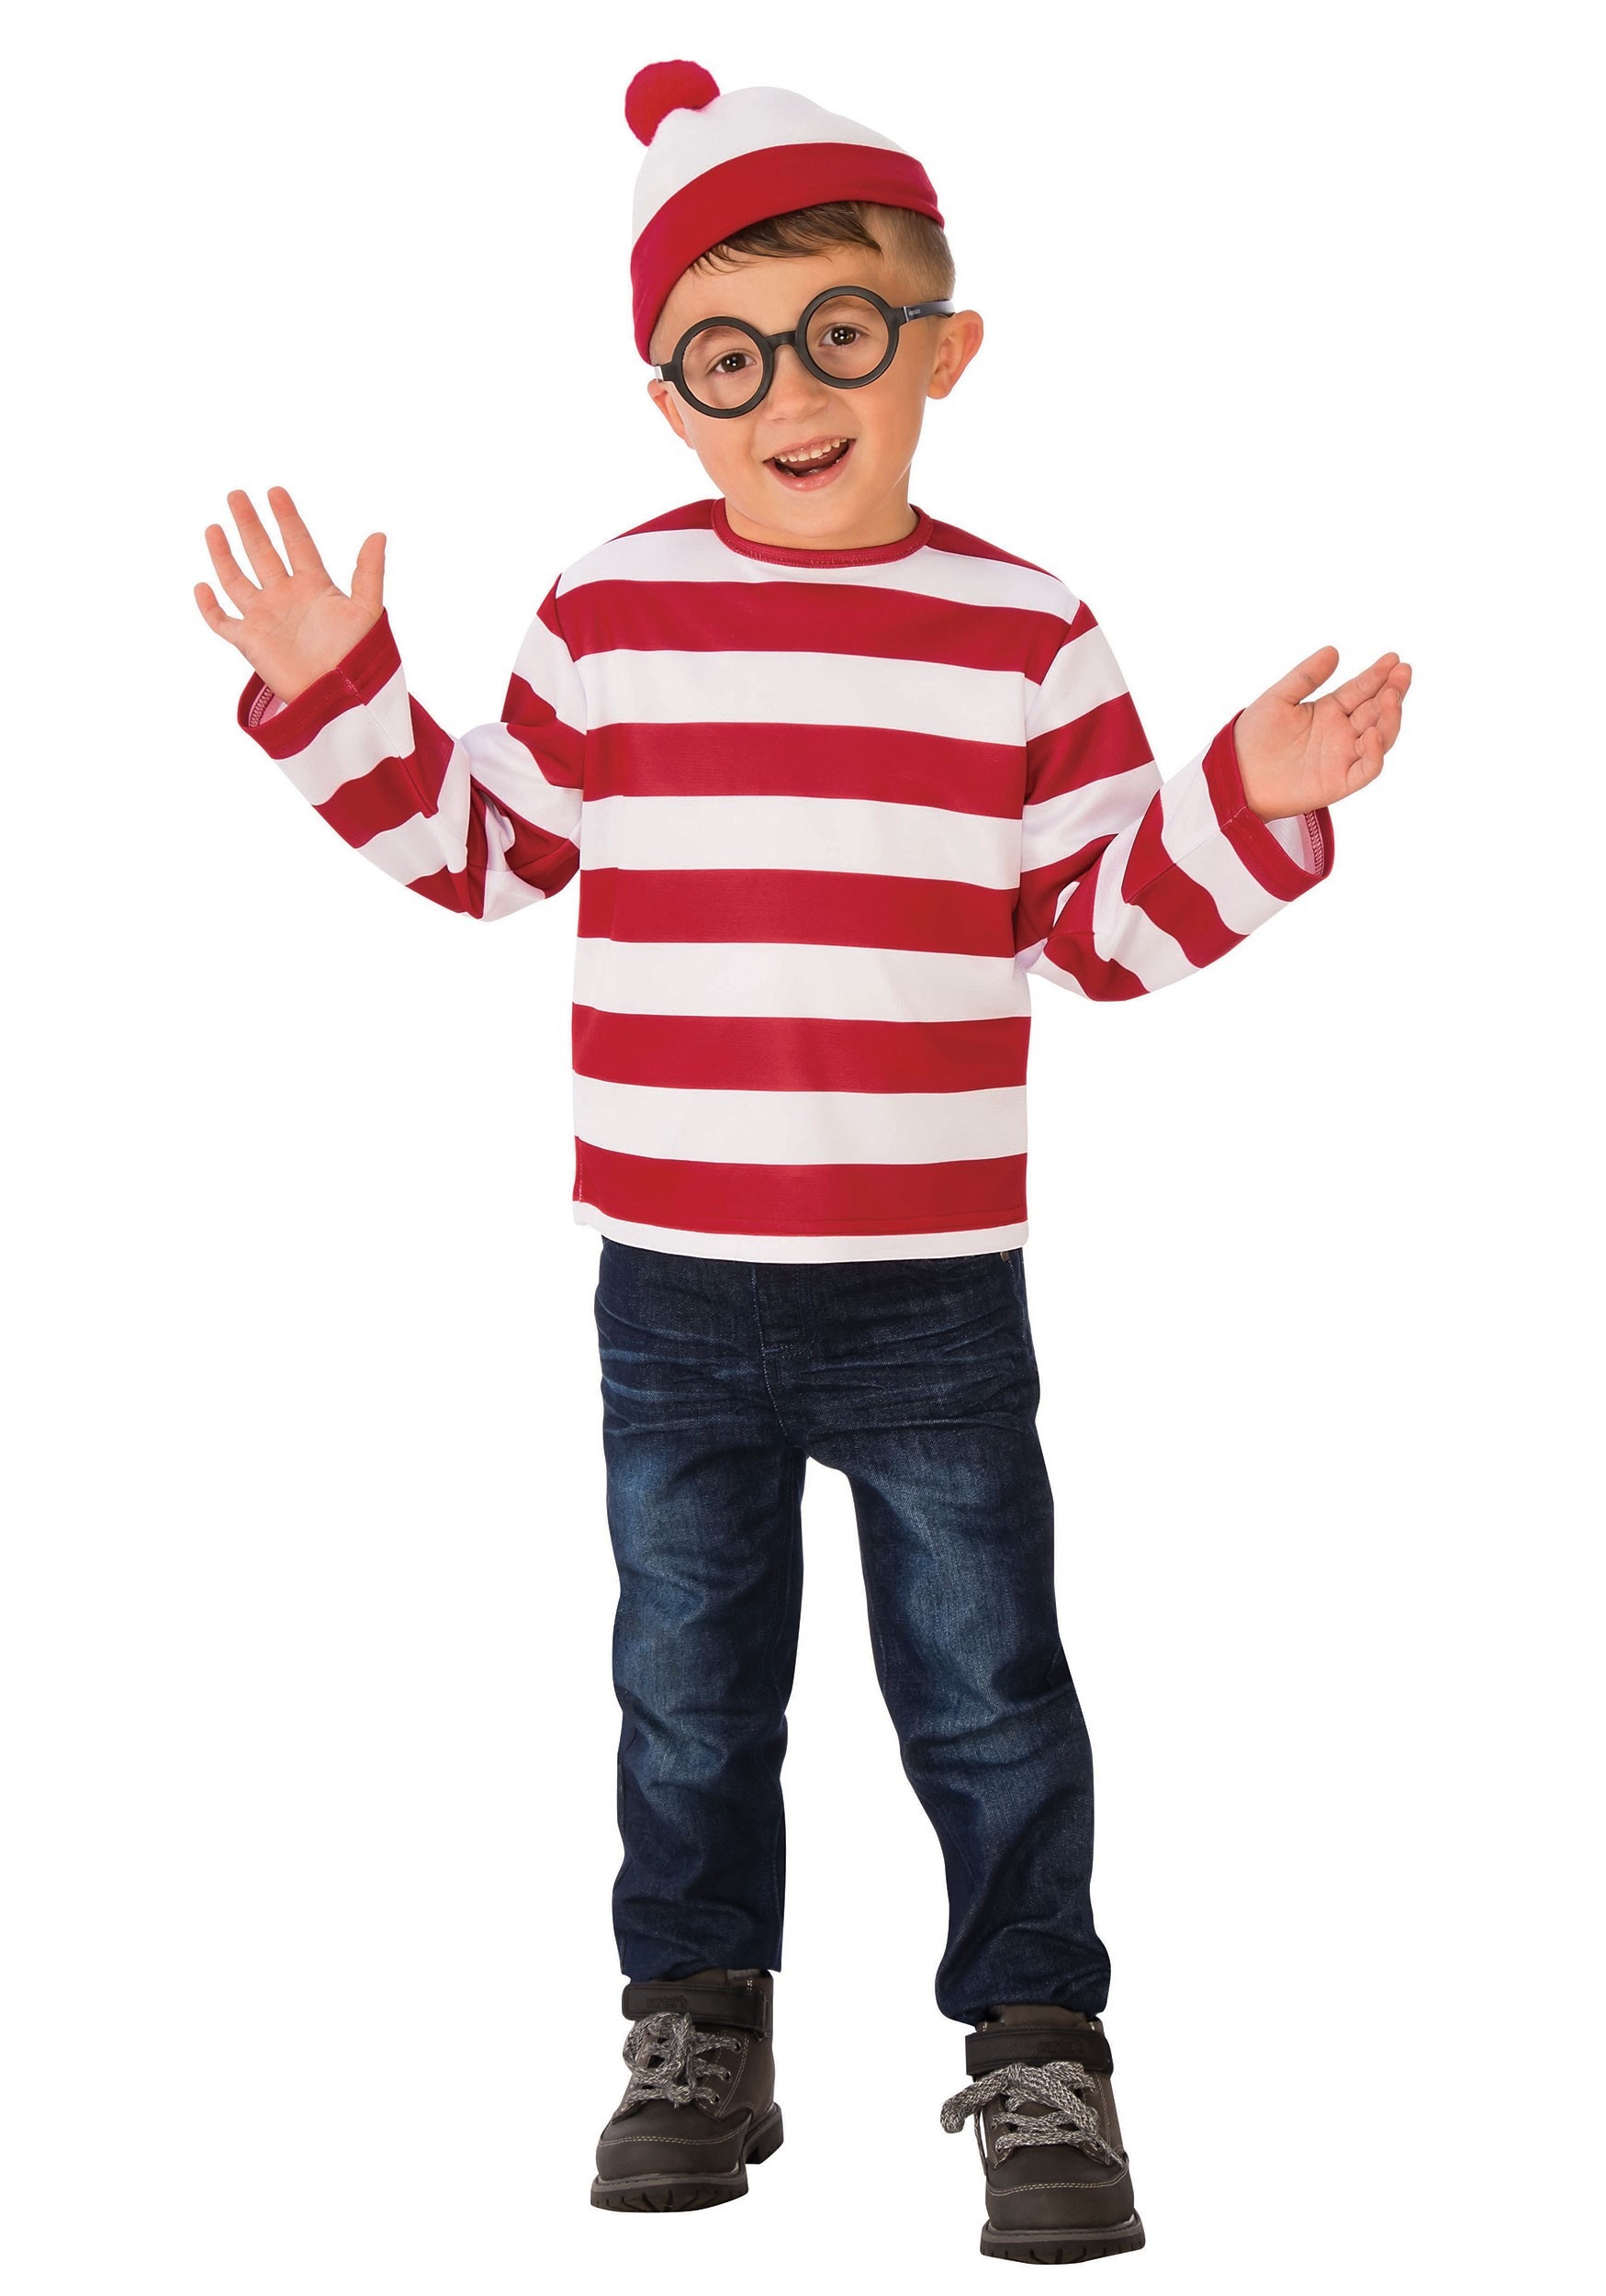 Official Wheres Waldo Costume for Kids